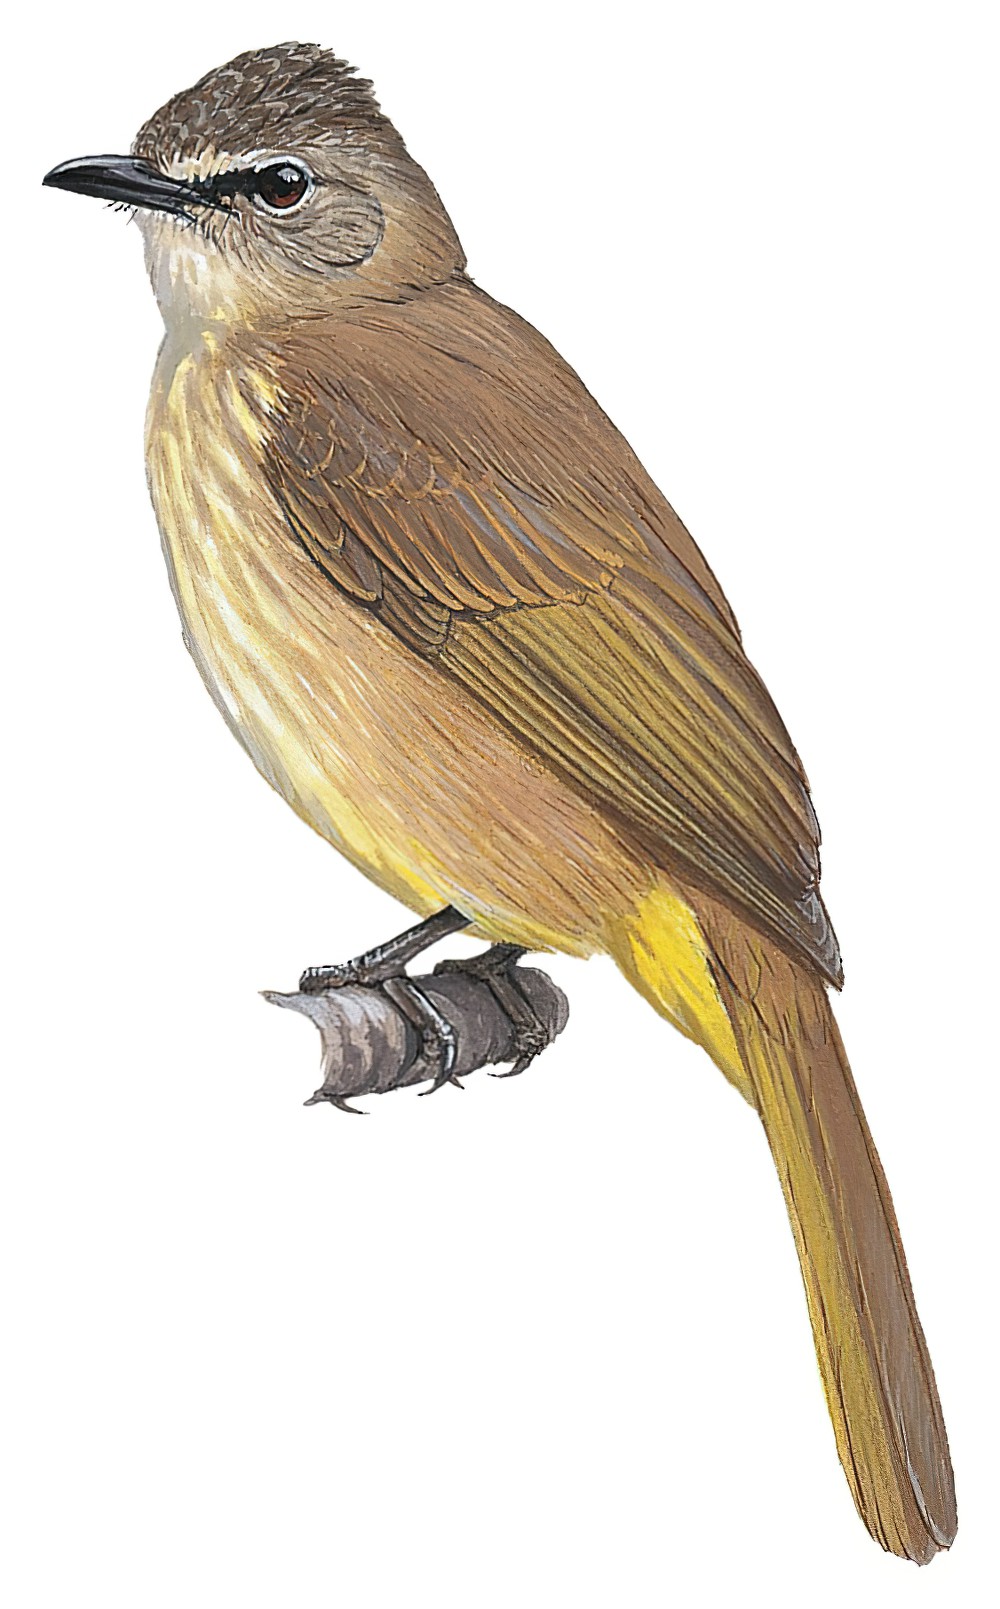 Flavescent Bulbul / Pycnonotus flavescens